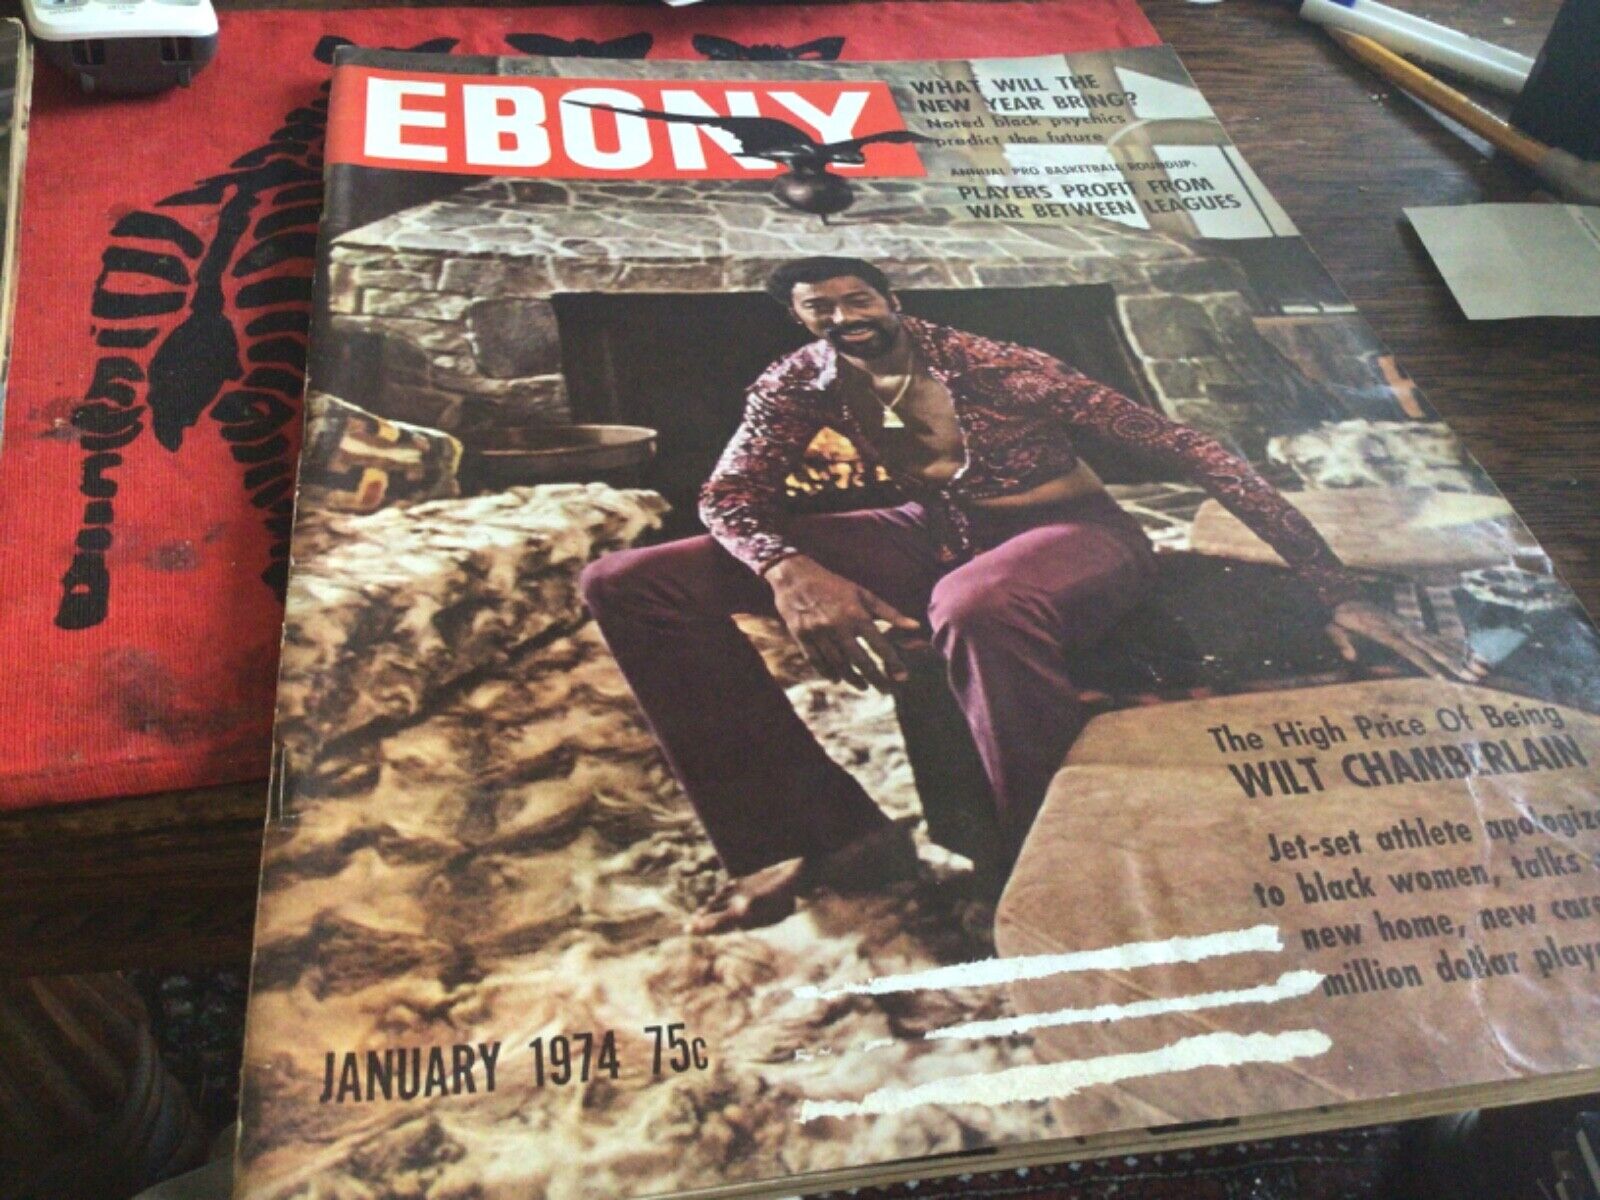 Wilt Chamberlain 1974 Ebony Magazine Cover Story